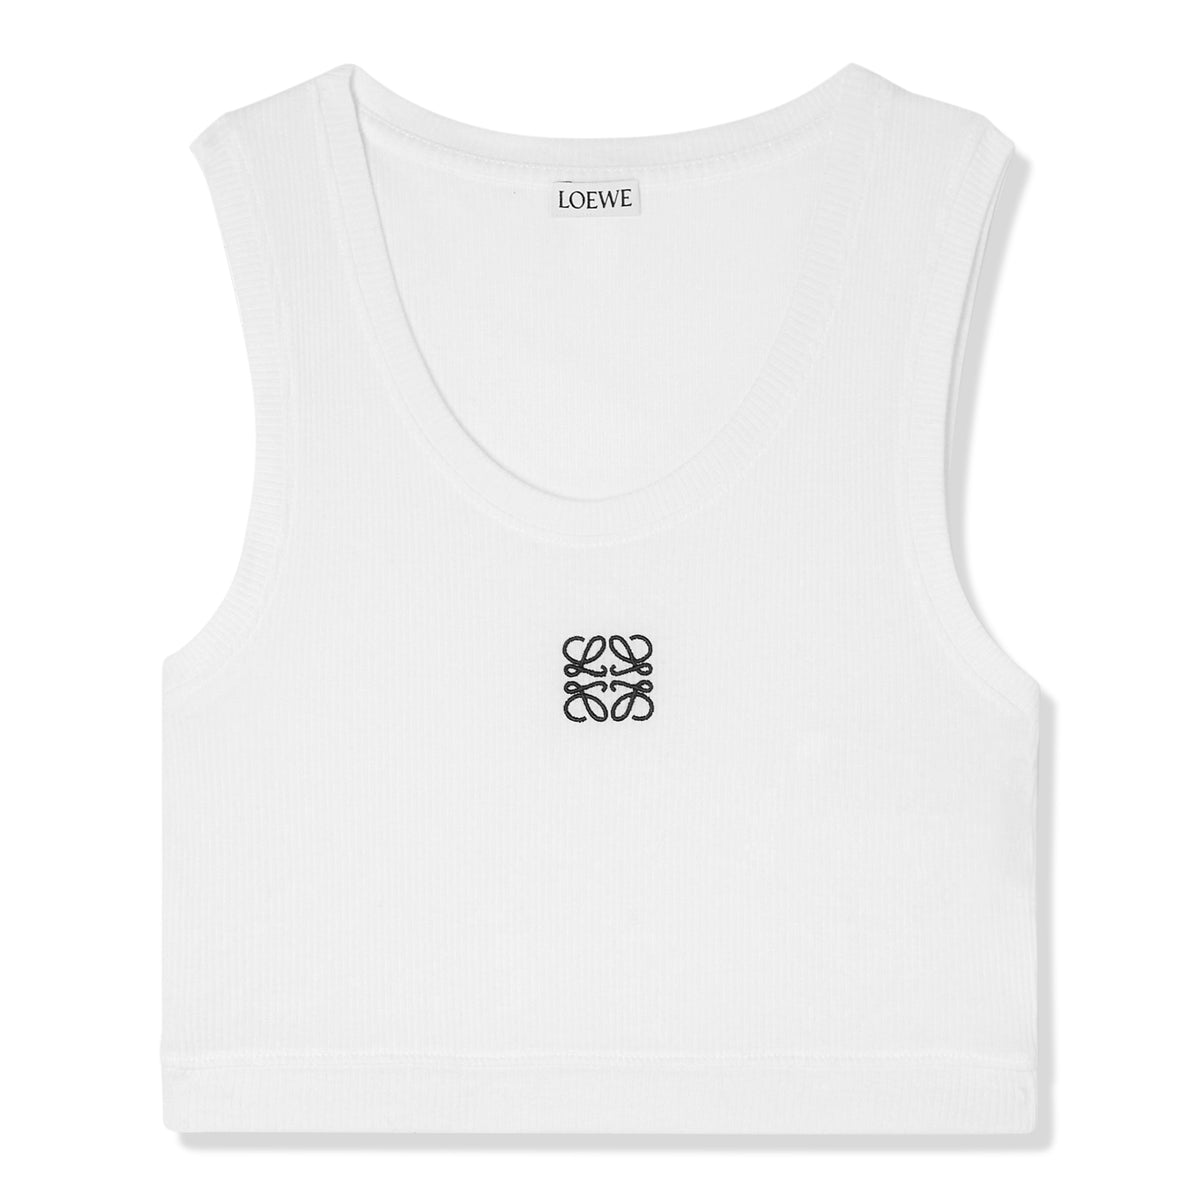 Chrome Hearts tank top shirt black white logo L size cotton 100 ladies used